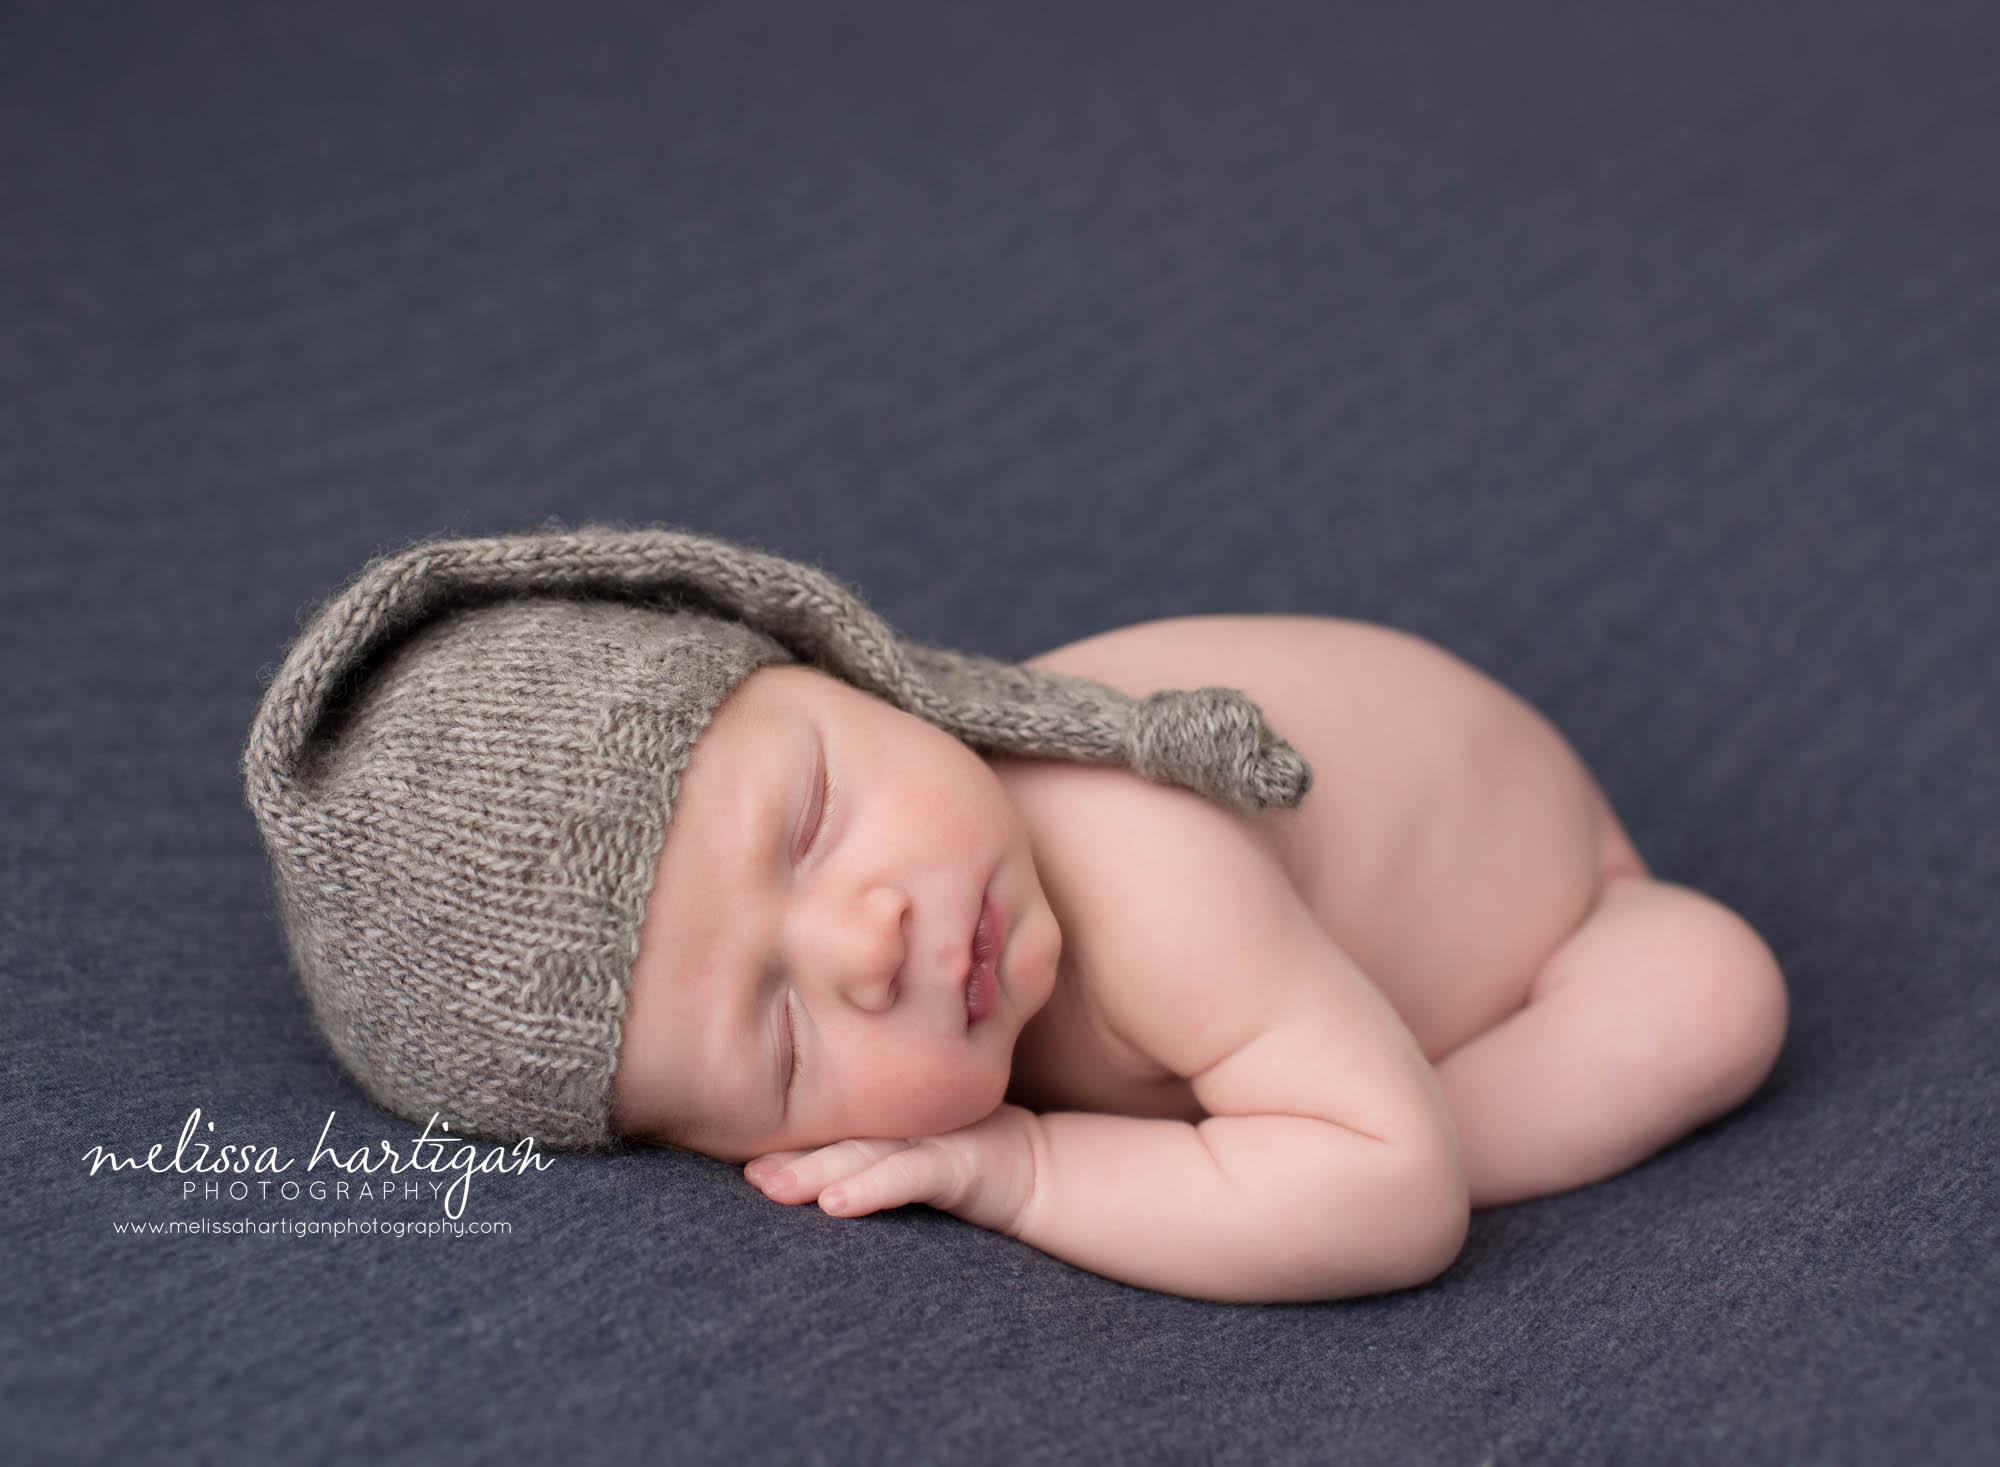 newborn baby boy posed on tummy wearing gray knitted sleepy cap